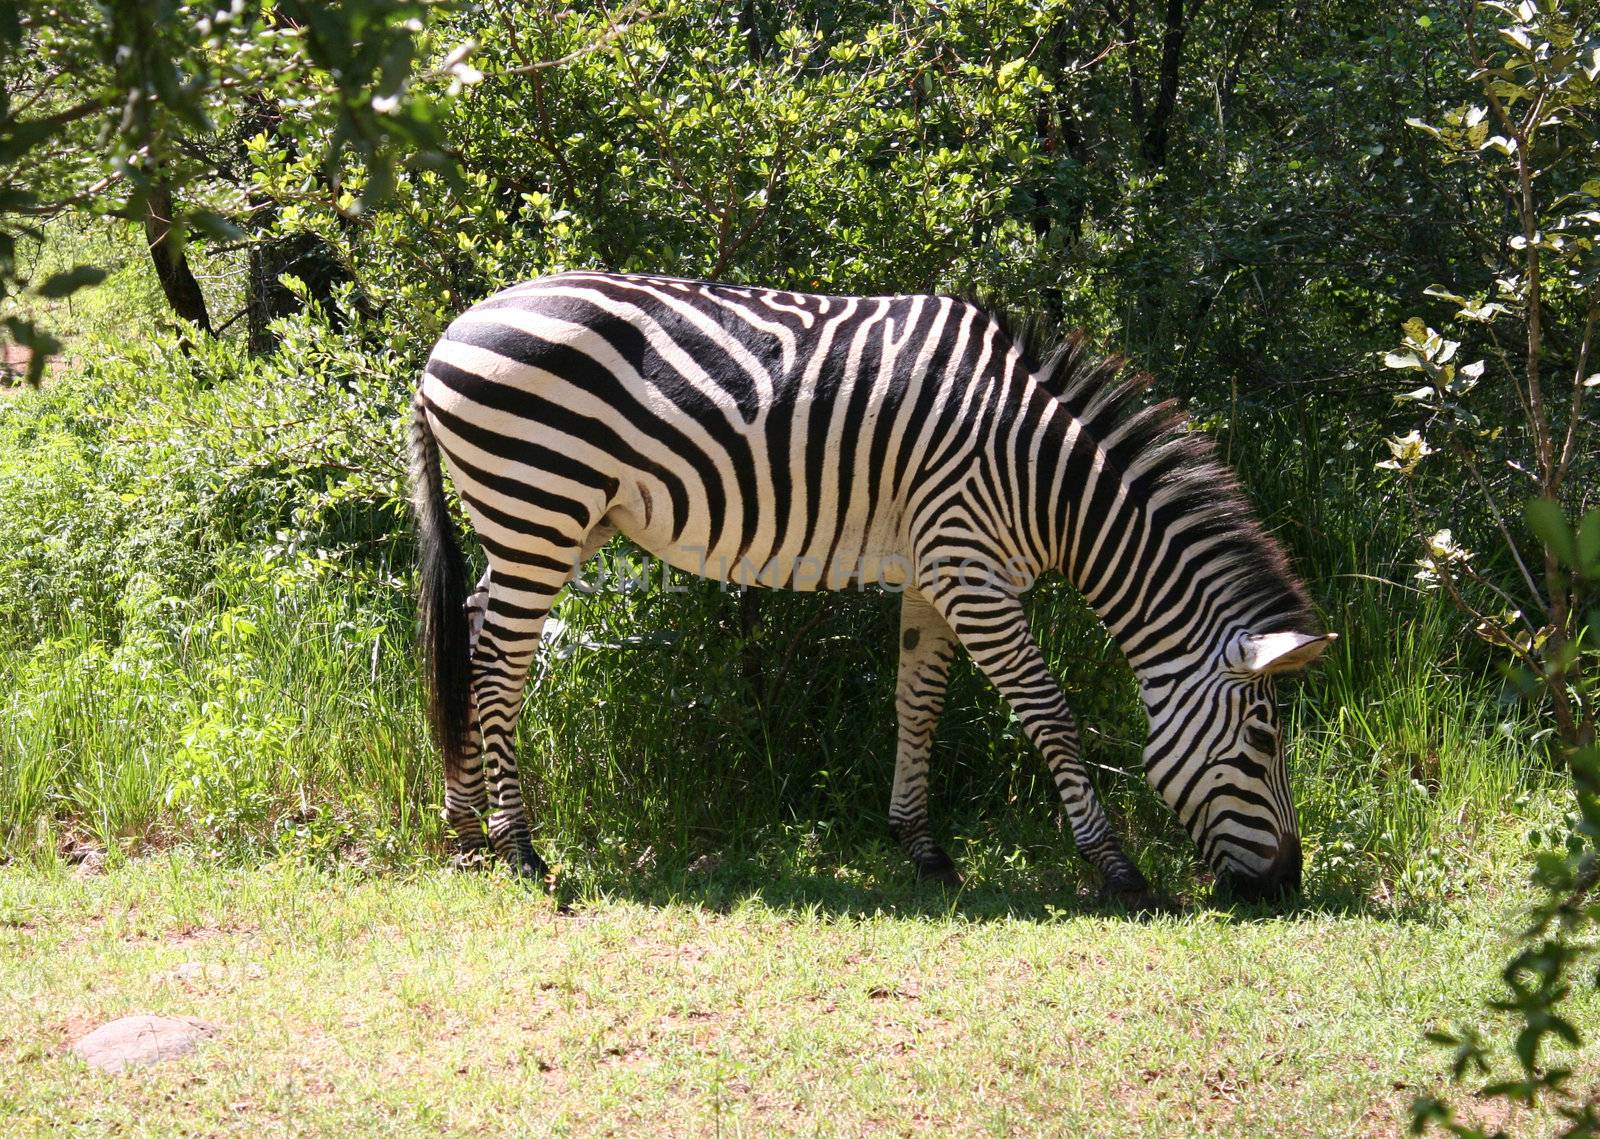  zebra in Africa